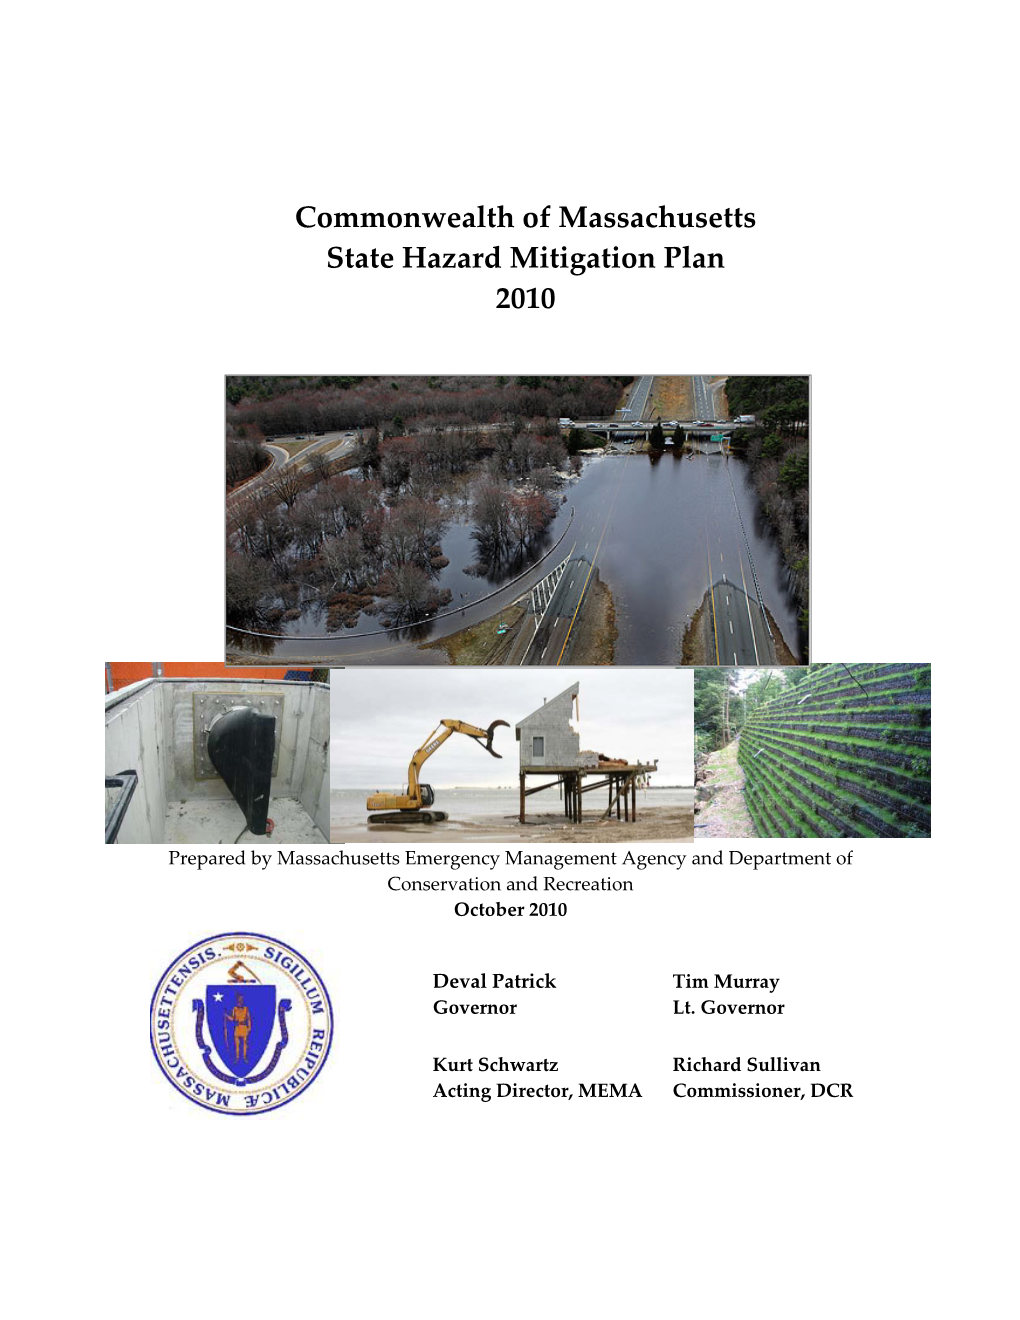 Commonwealth of Massachusetts State Hazard Mitigation Plan 2010